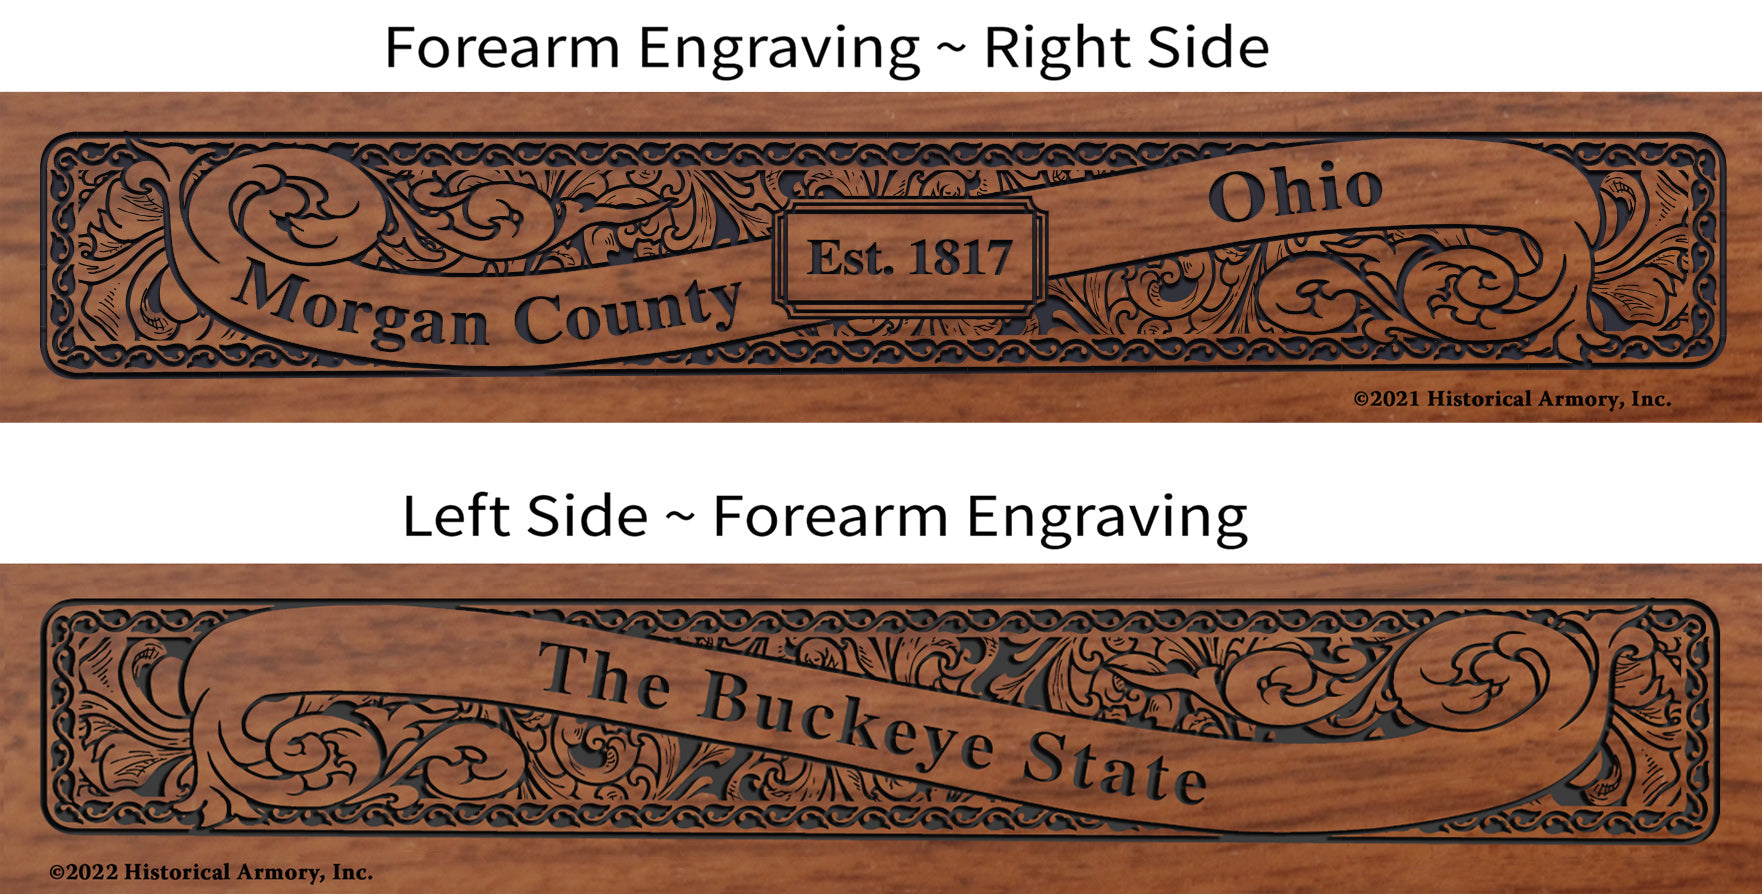 Morgan County Ohio Engraved Rifle Forearm